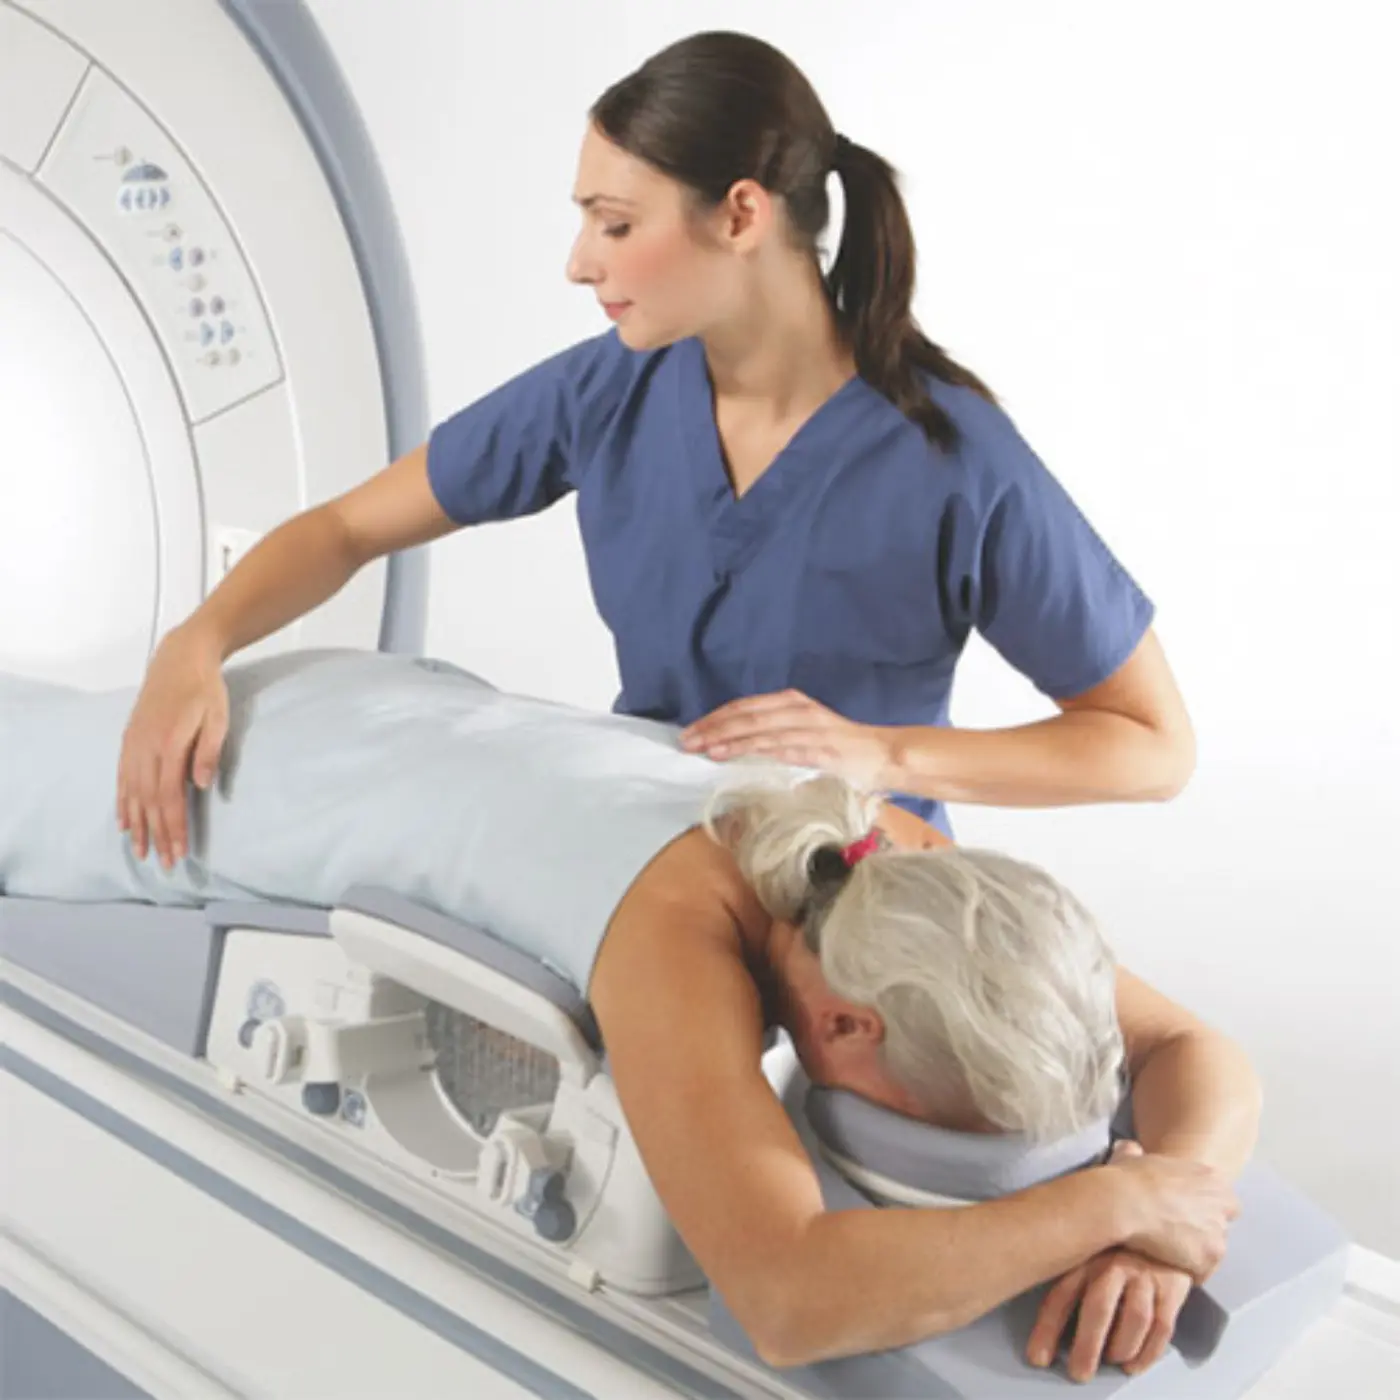 Breast MRI Imaging Scan Service in Richmond Texas